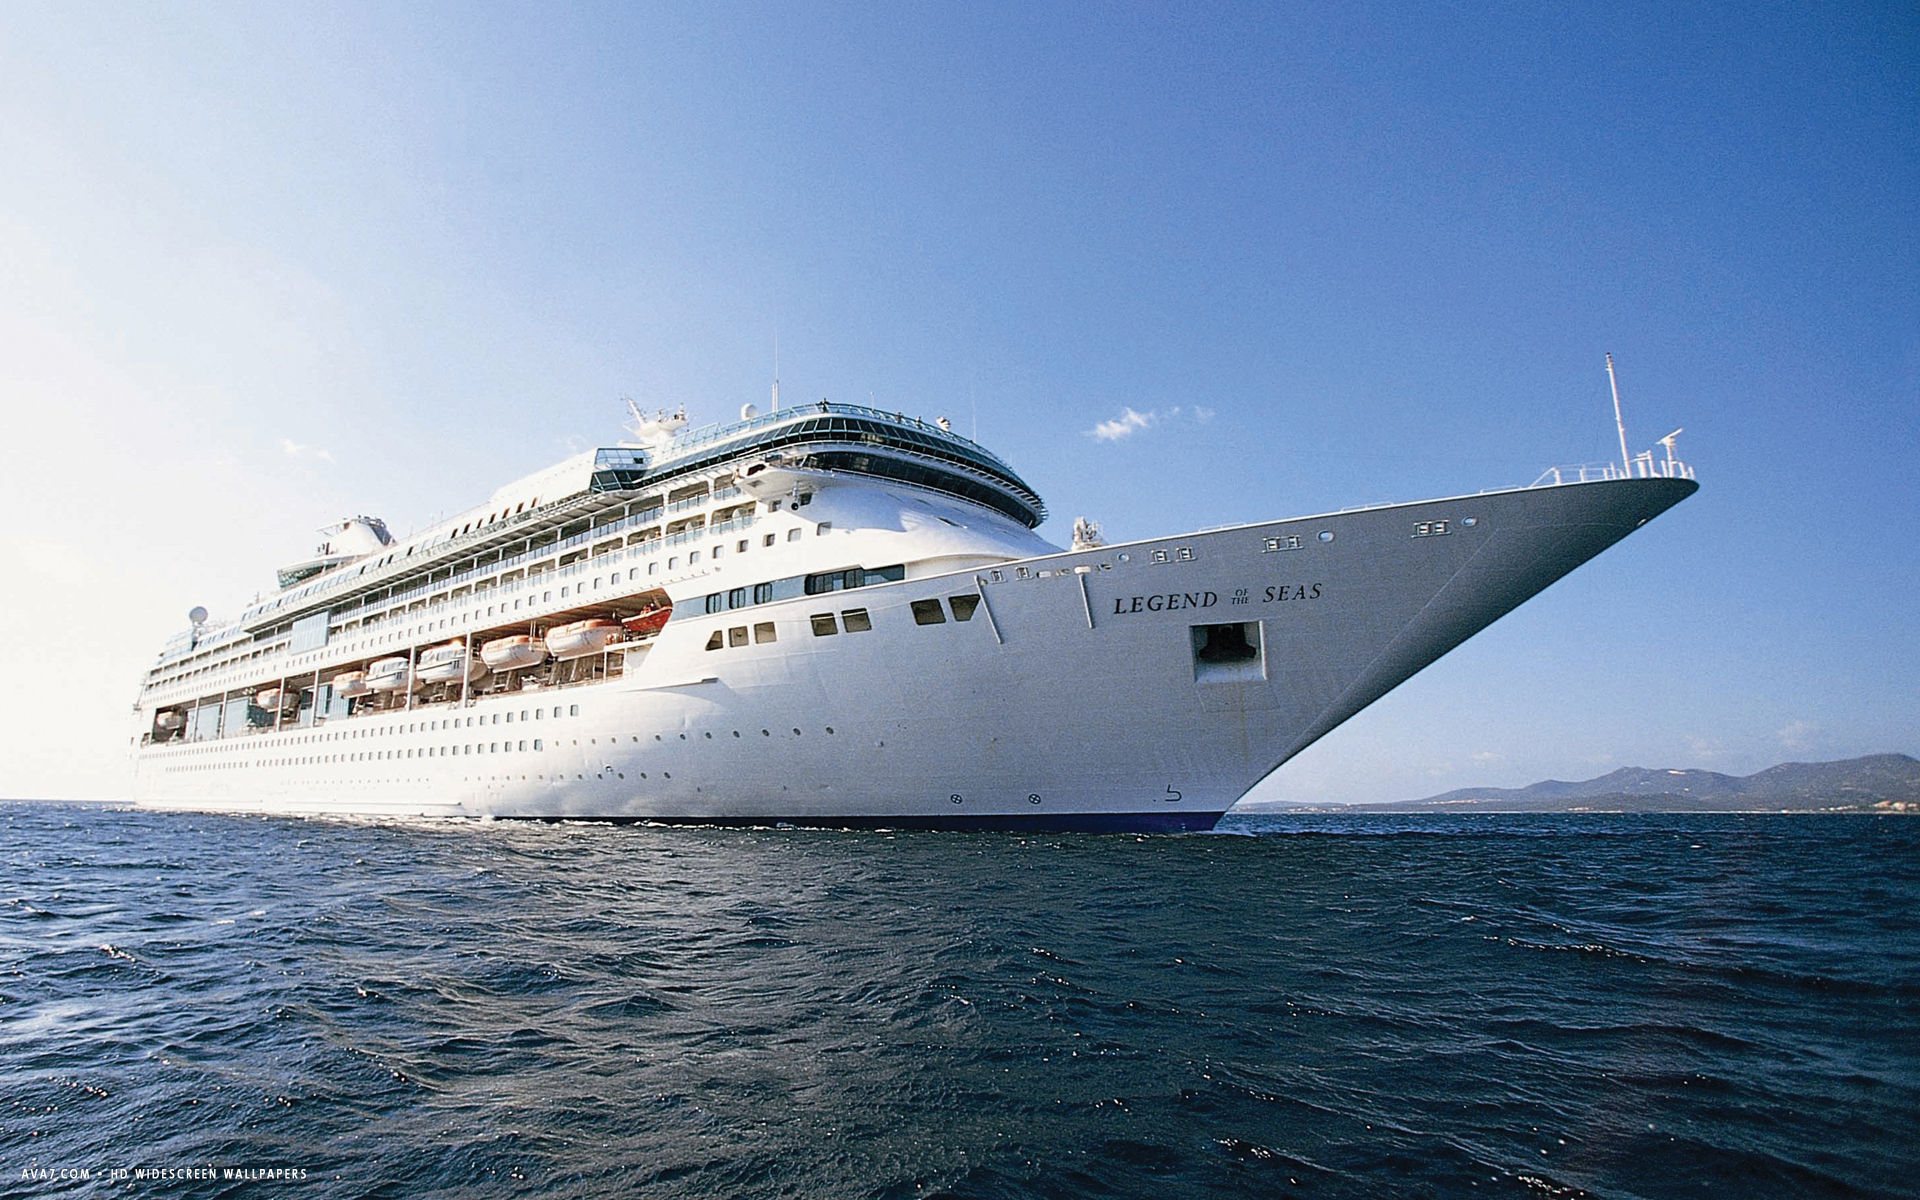 Legend Of The Seas Cruise Ship Hd Widescreen Wallpaper - 皇家 加勒比 郵輪 公司 - HD Wallpaper 